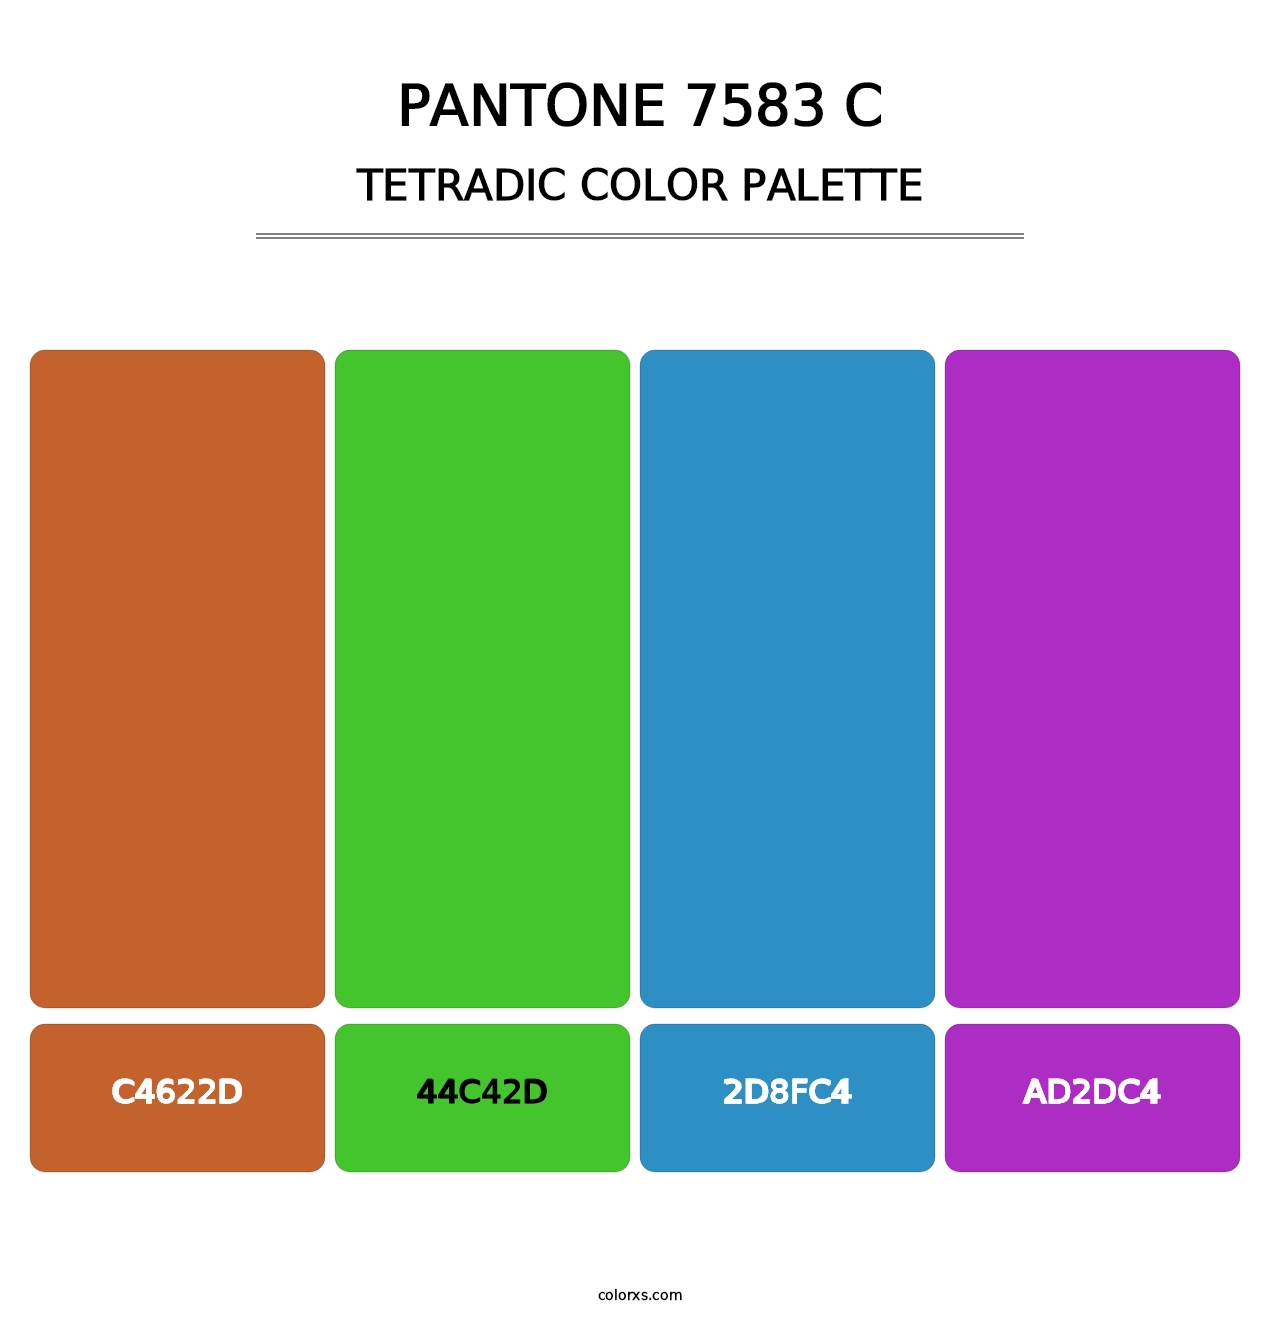 PANTONE 7583 C - Tetradic Color Palette